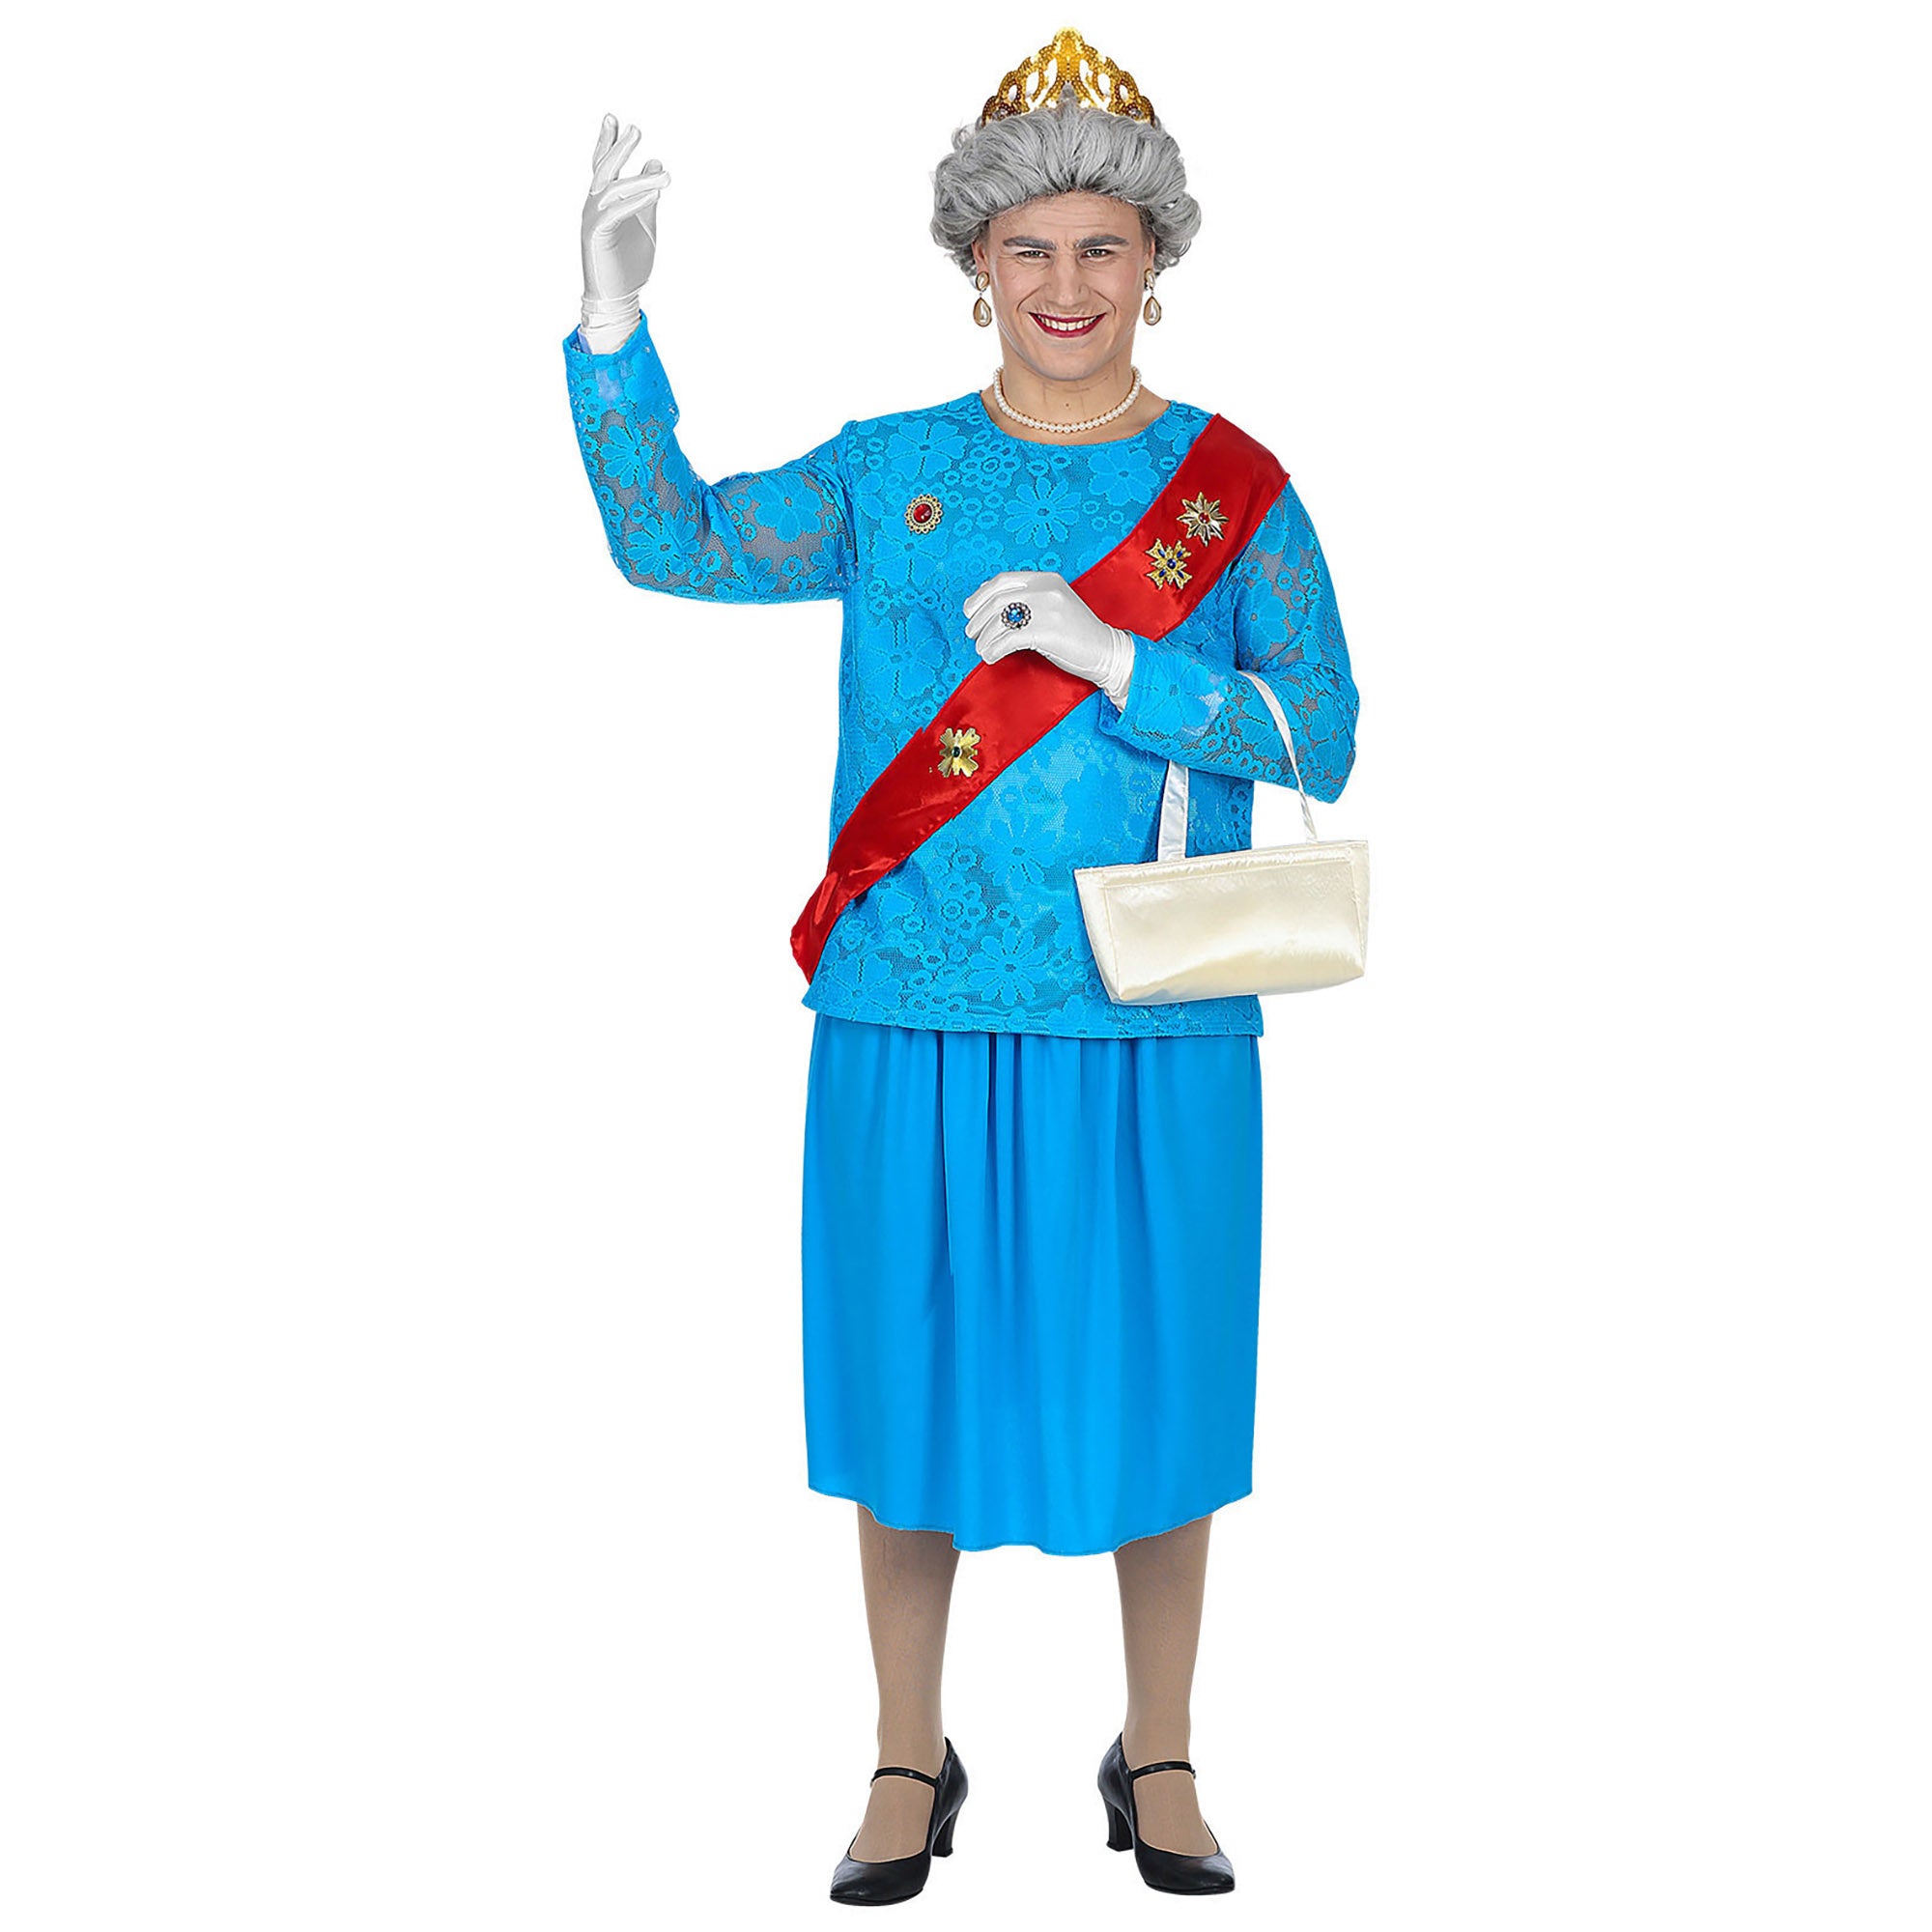 Widmann - Koning Prins & Adel Kostuum - The Queen Koningin Van Engeland Elizabeth - Man - blauw - Medium / Large - Carnavalskleding - Verkleedkleding